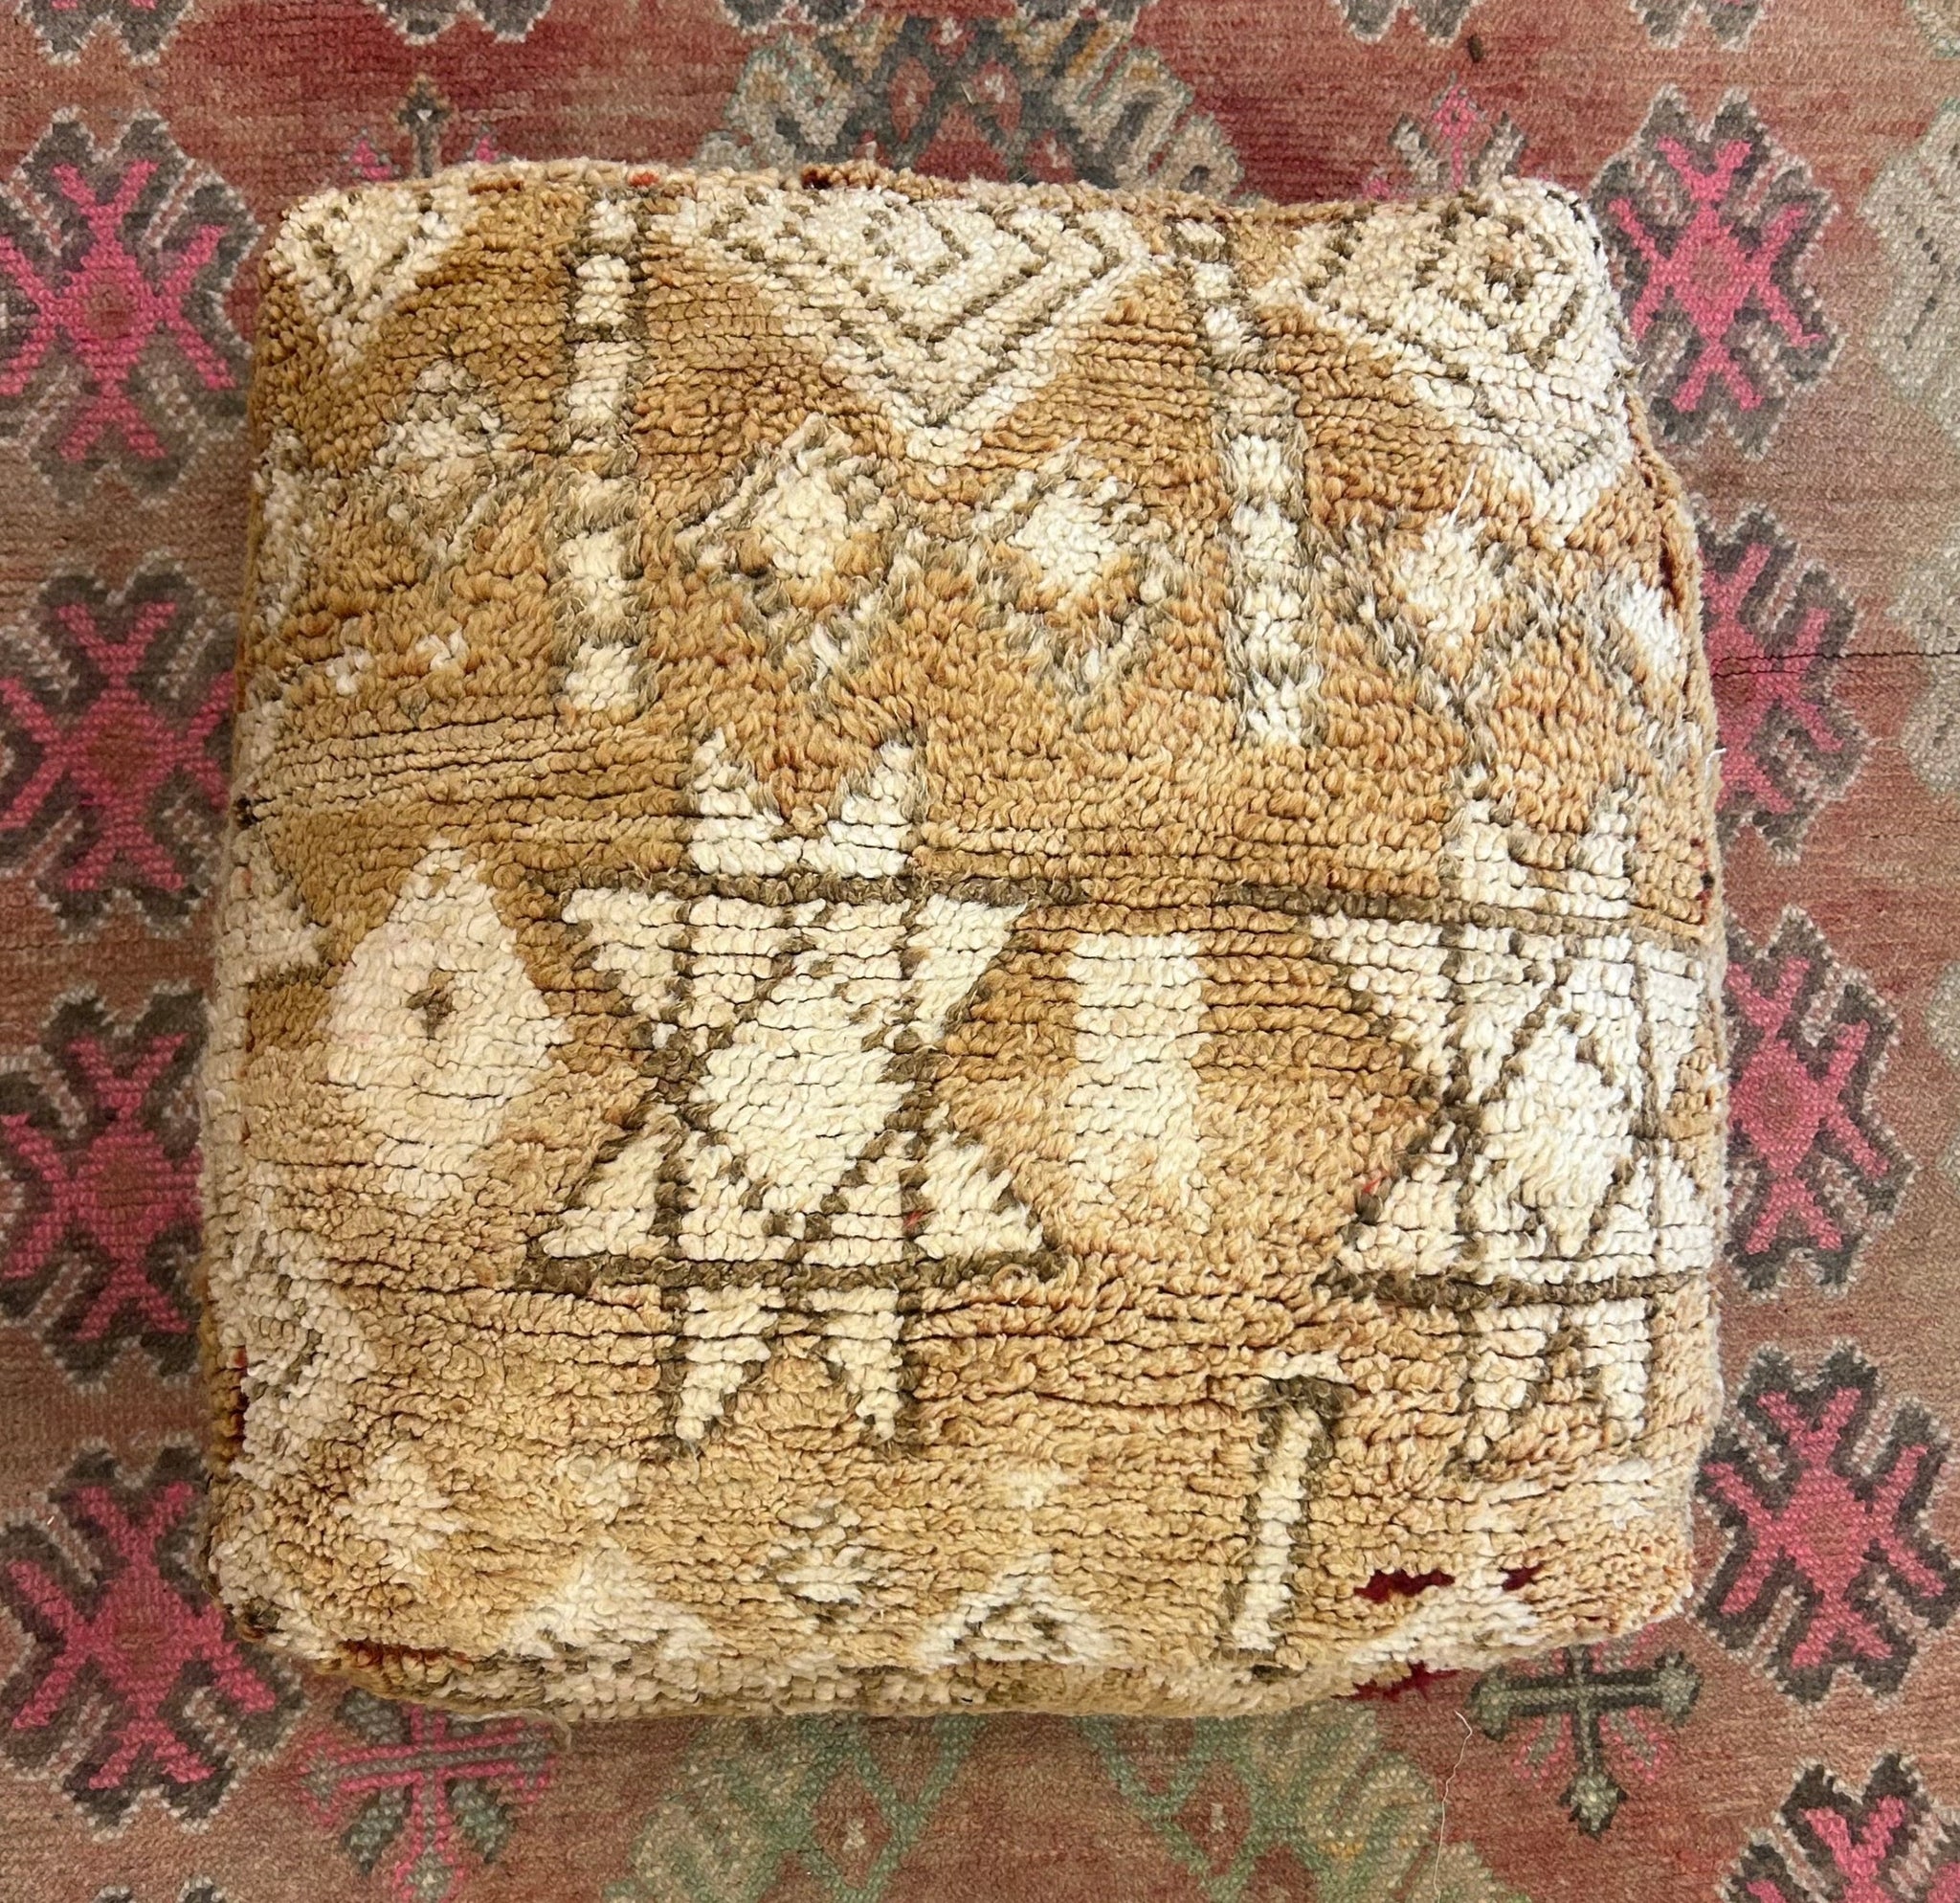 Moroccan Floor Vintage Cushion